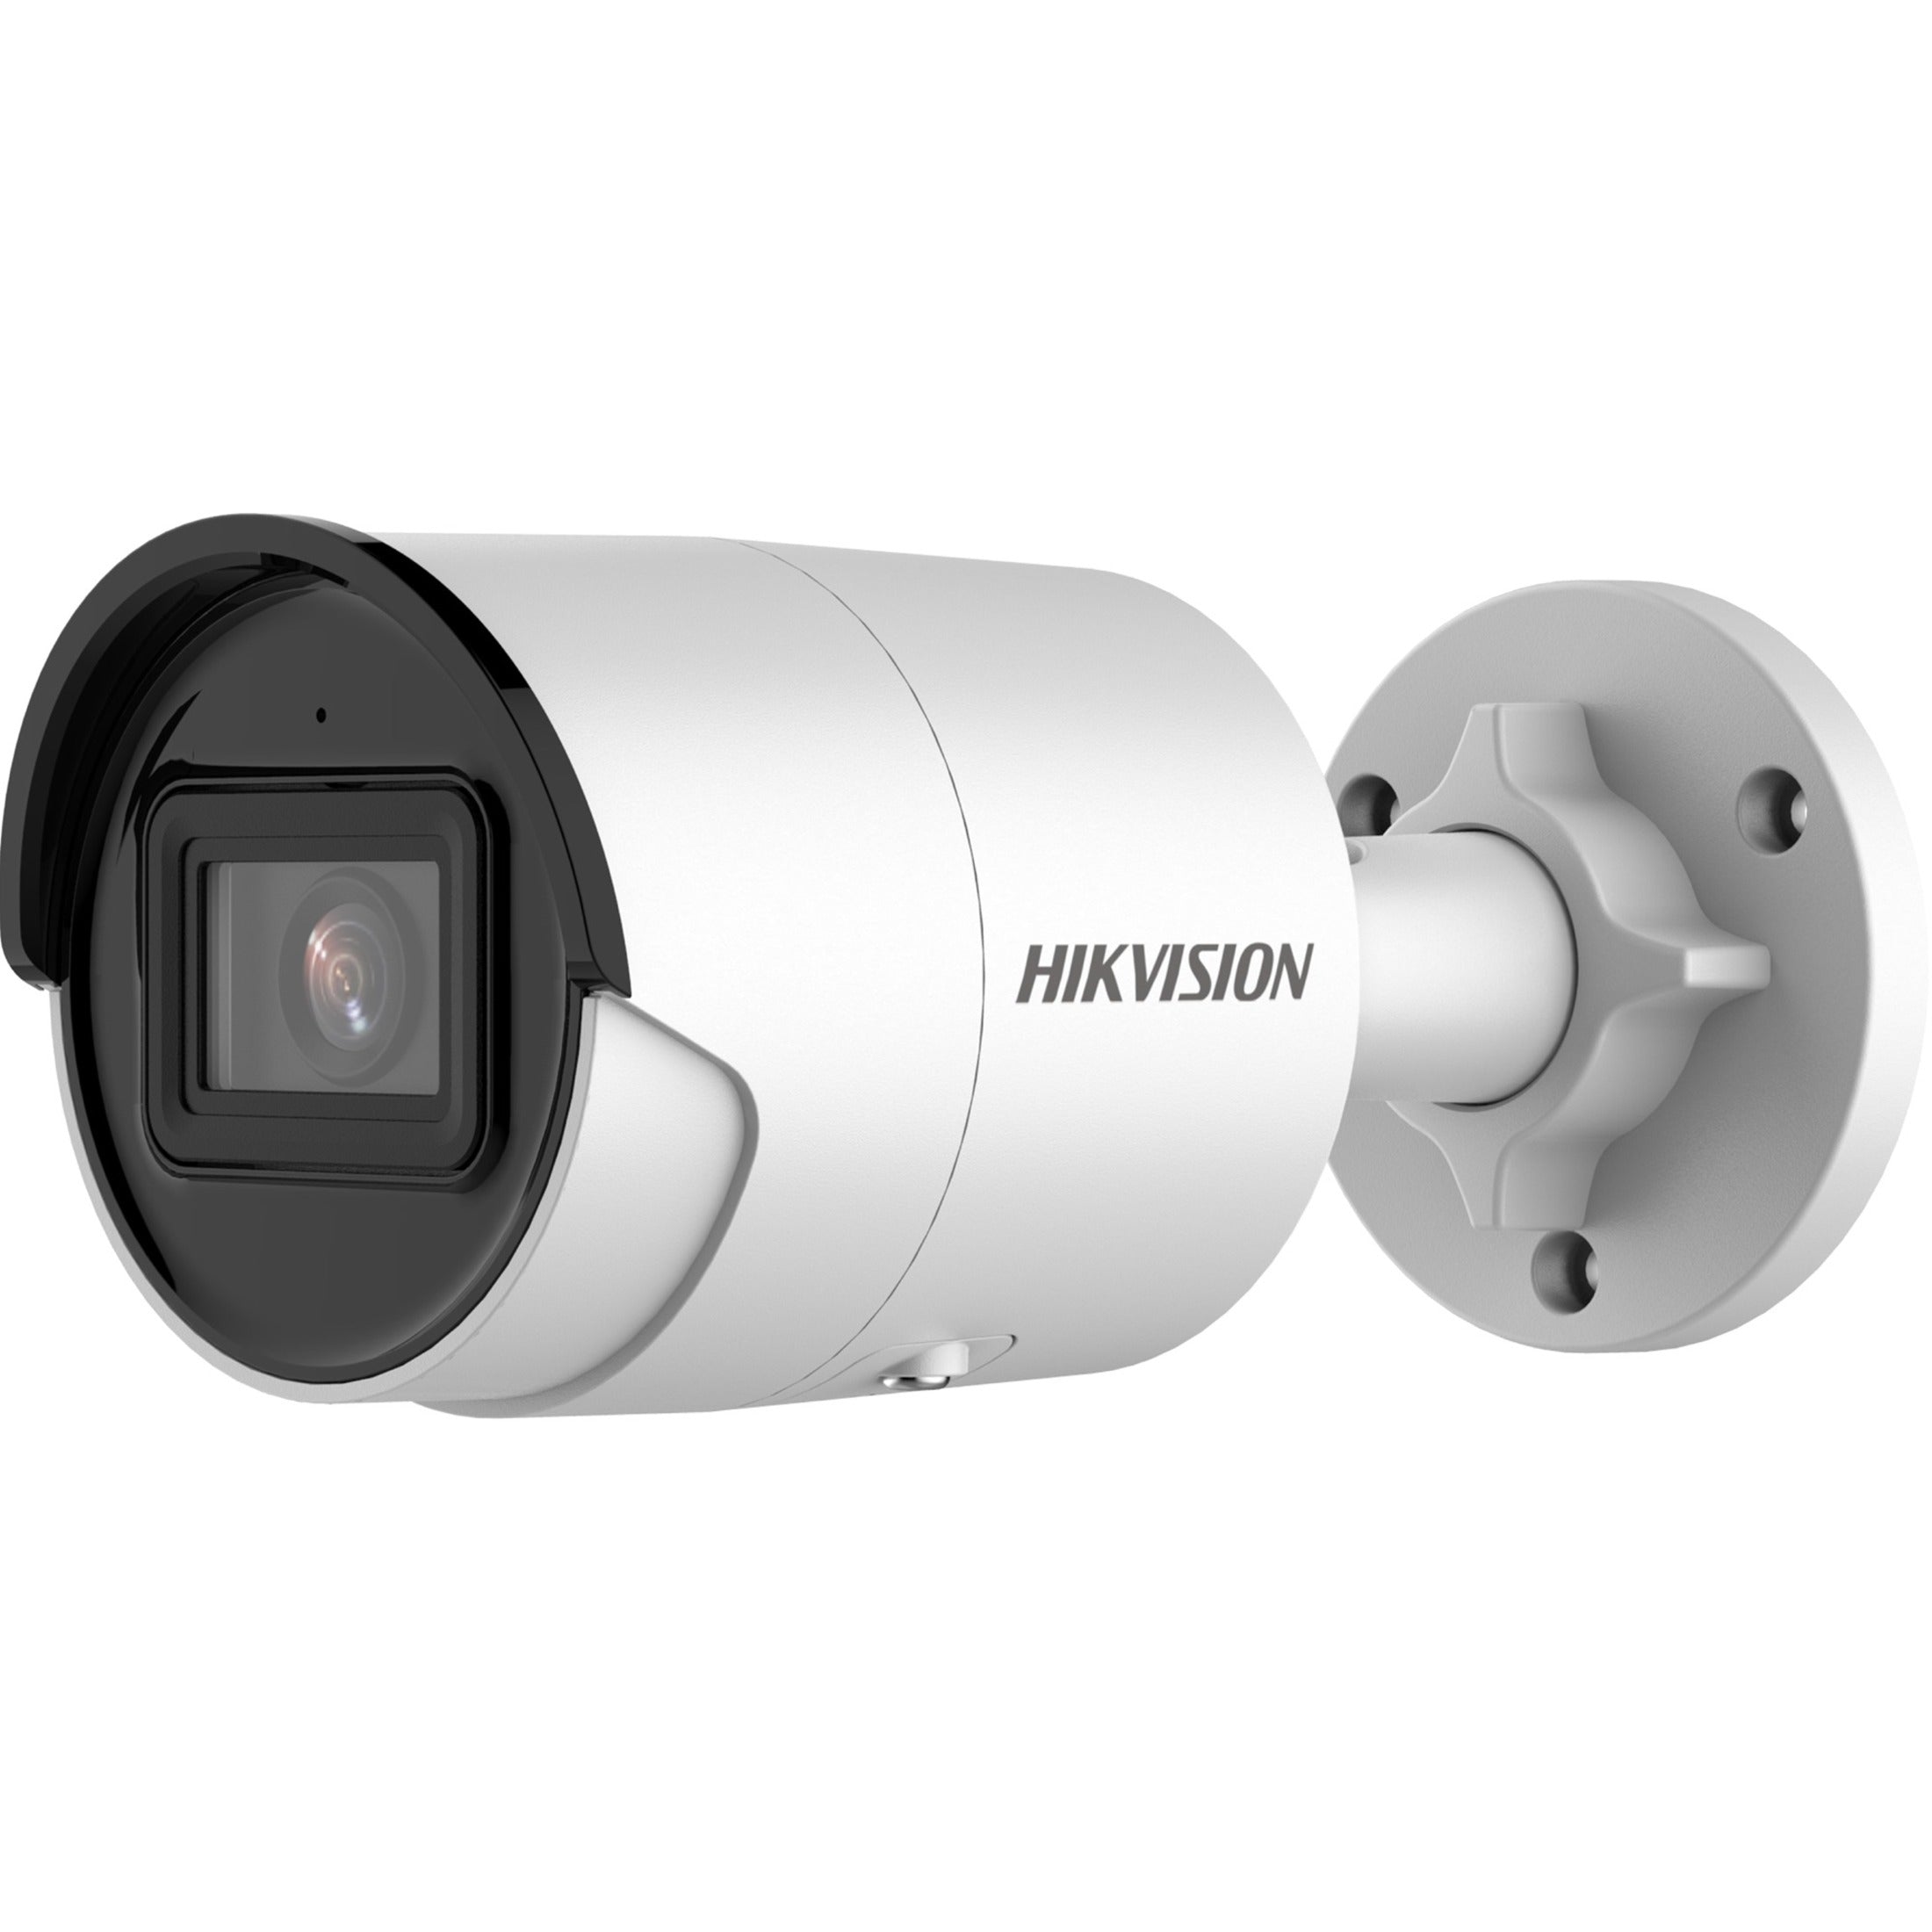 Hikvision DS-2CD2043G2-IU 4MM EasyIP 4MP EXIR Fixed Bullet Network Camera, D/N IR, 84° FOV